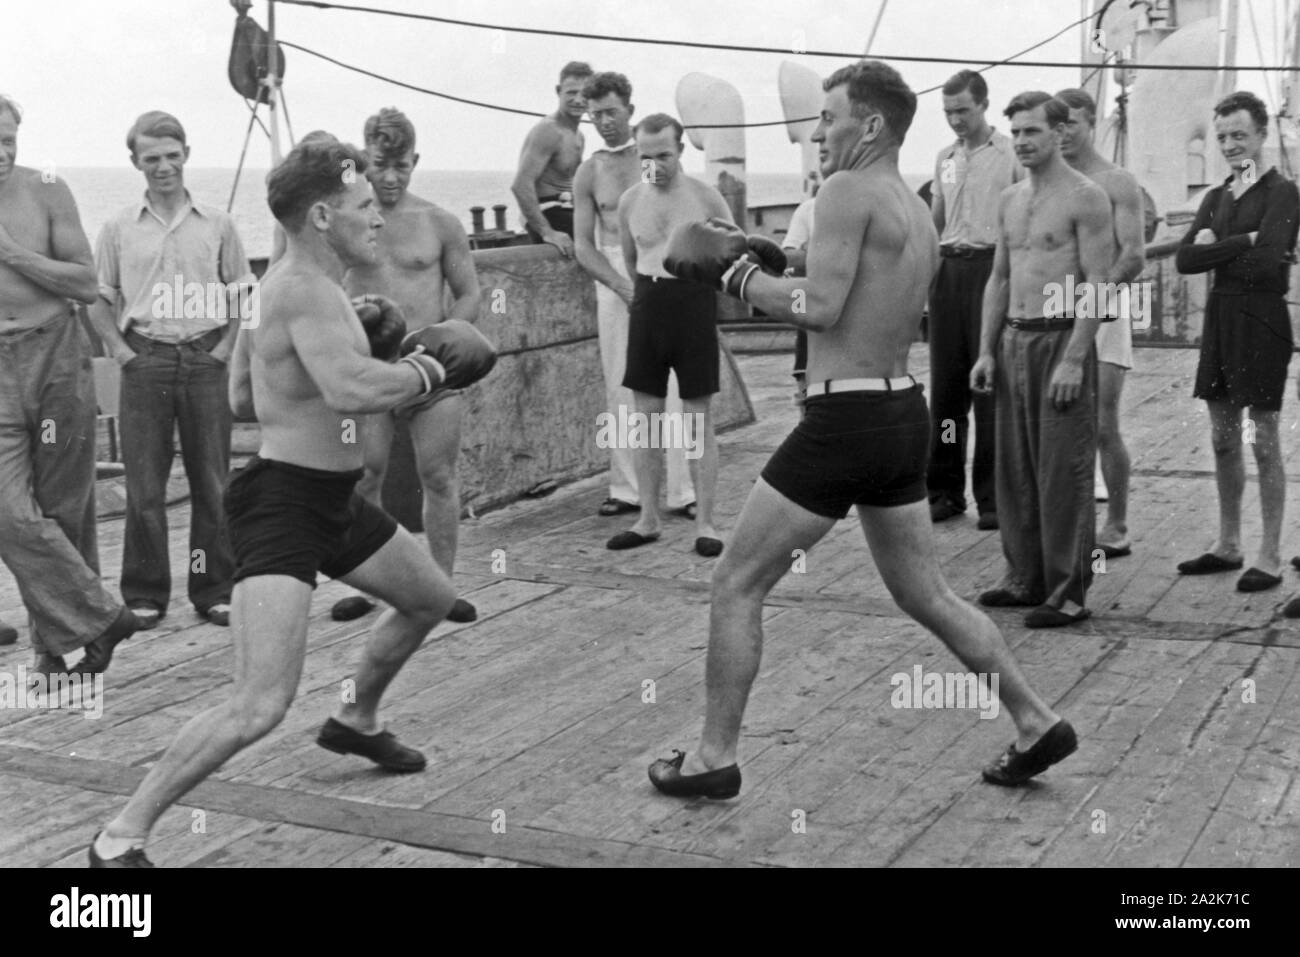 Die Männer der Besatzung des Walfangfabrikschiffs 'Jan Wellem' halten sich durch Boxen fit, 1930er Jahre. Crew members of the factory vessel 'Jan Wellem' doing a sparring, 1930s. Stock Photo